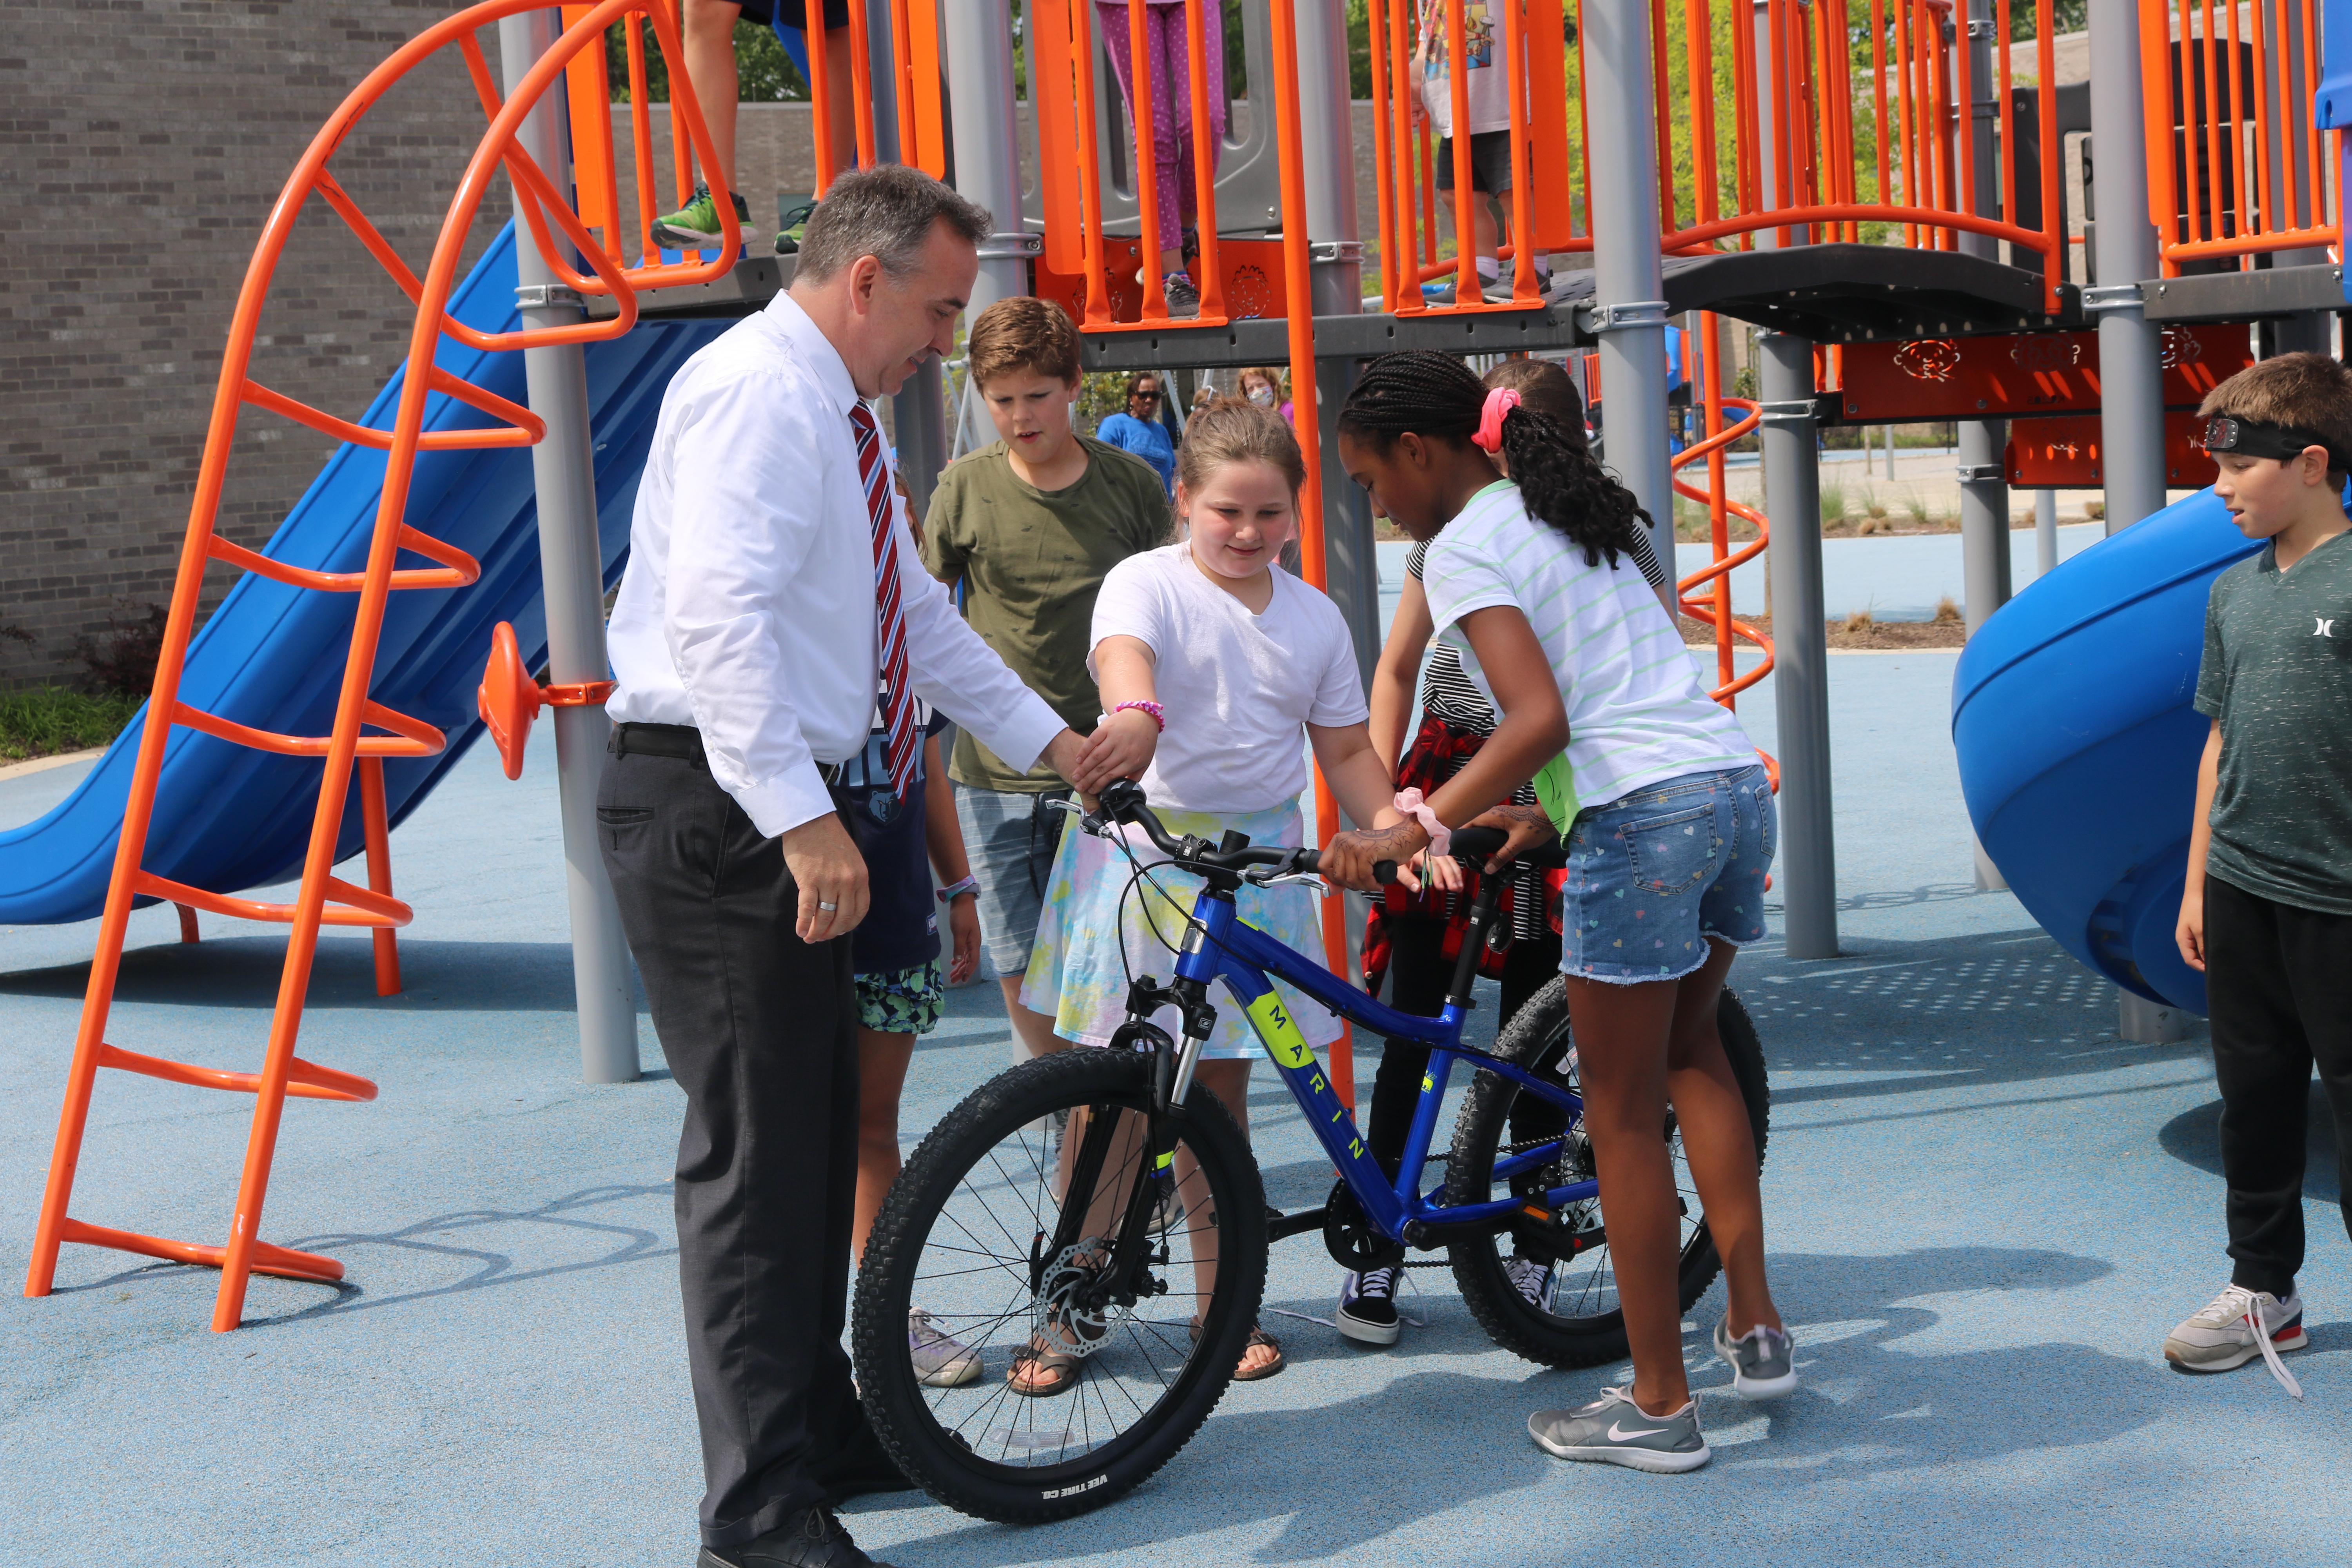 Mr. Manuel with children on a bike